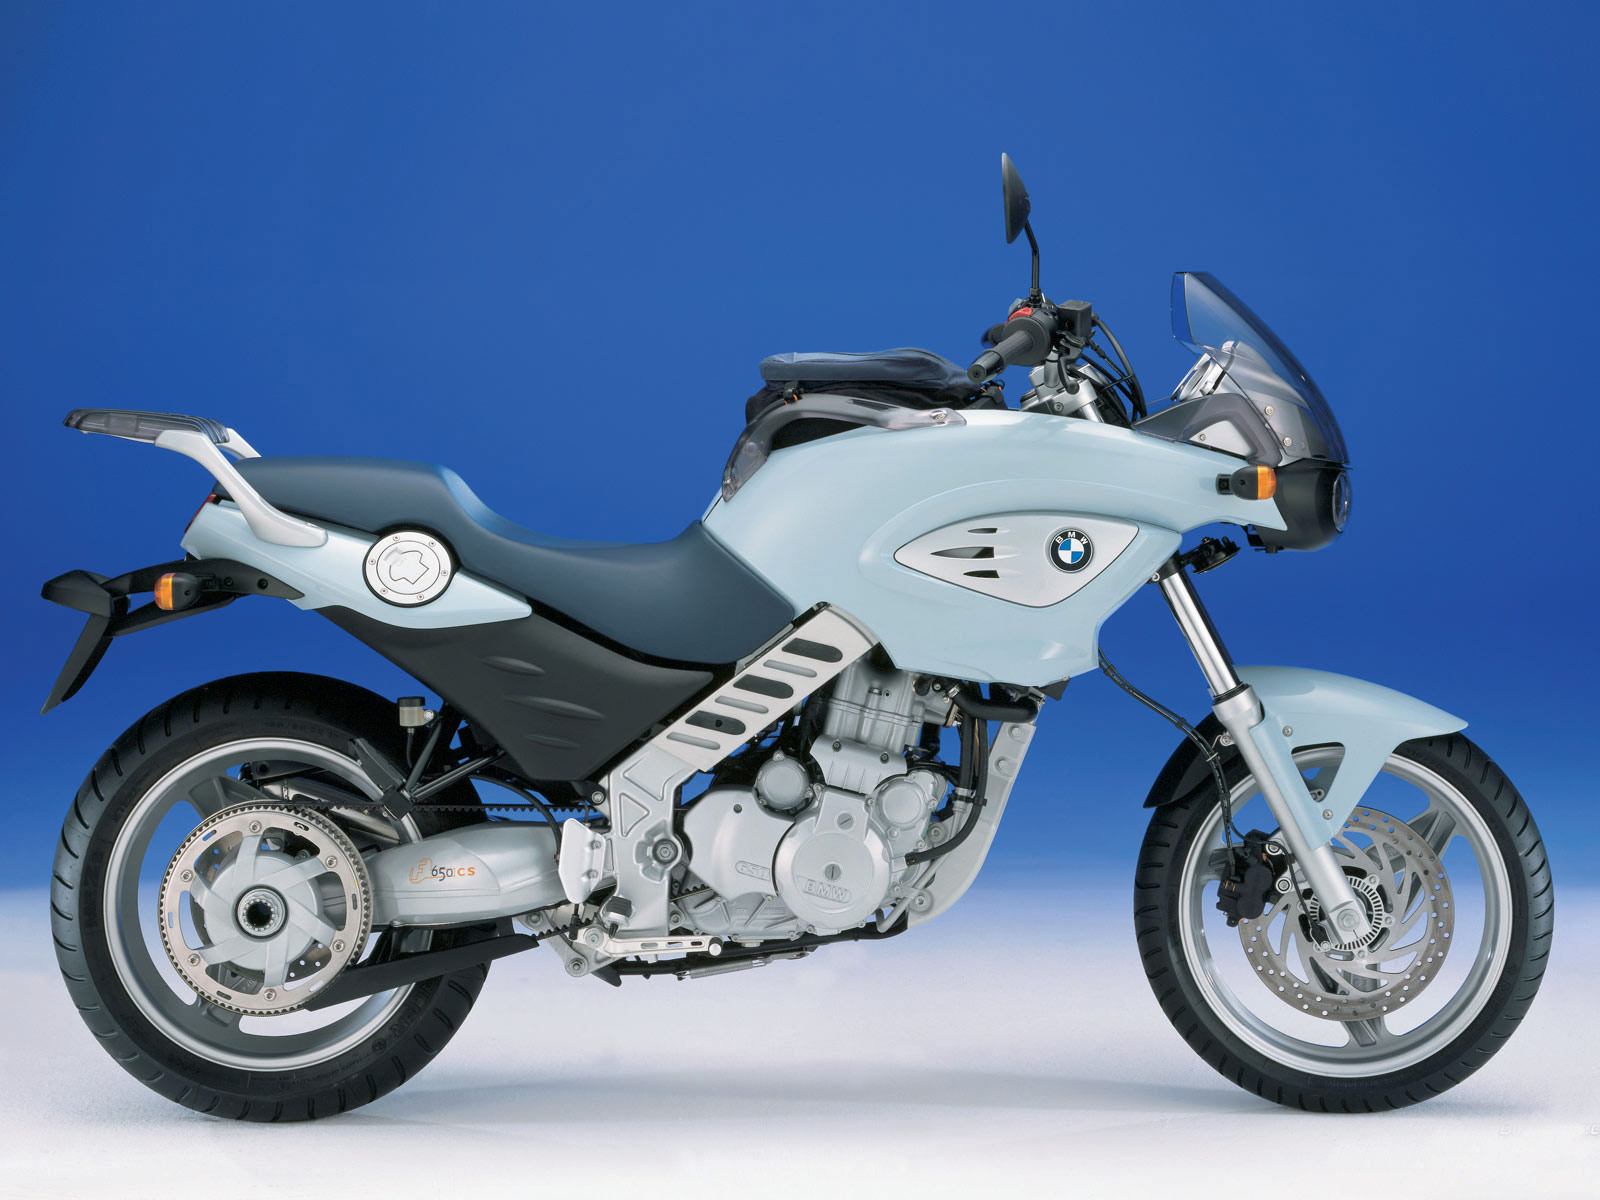 F650cs Bmw Motorcycle Insurance Information Automotive